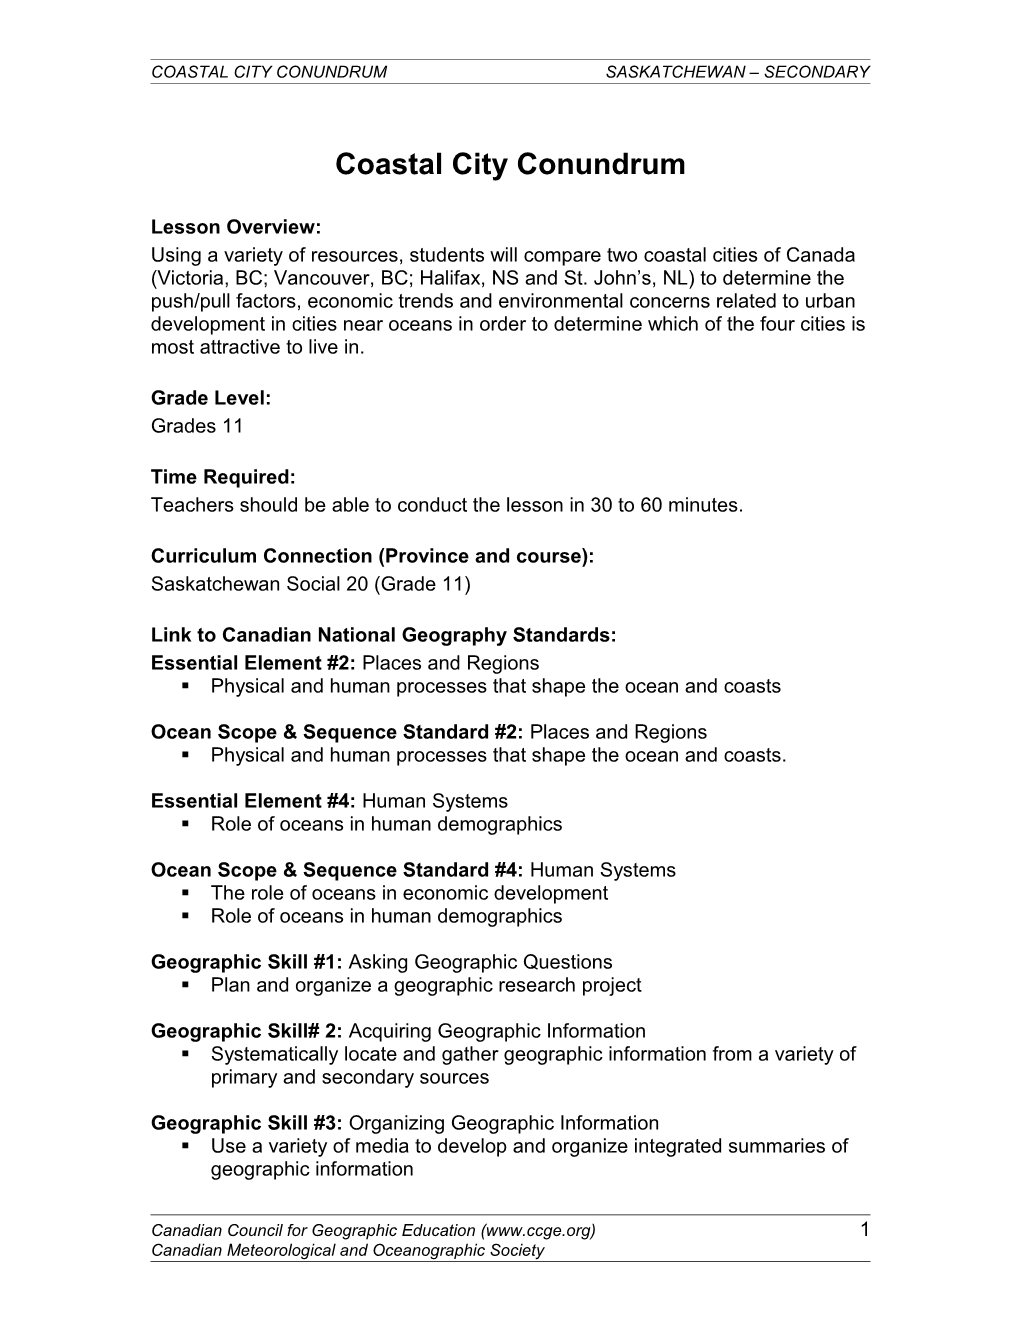 Coastal City Conundrum Saskatchewan Secondary